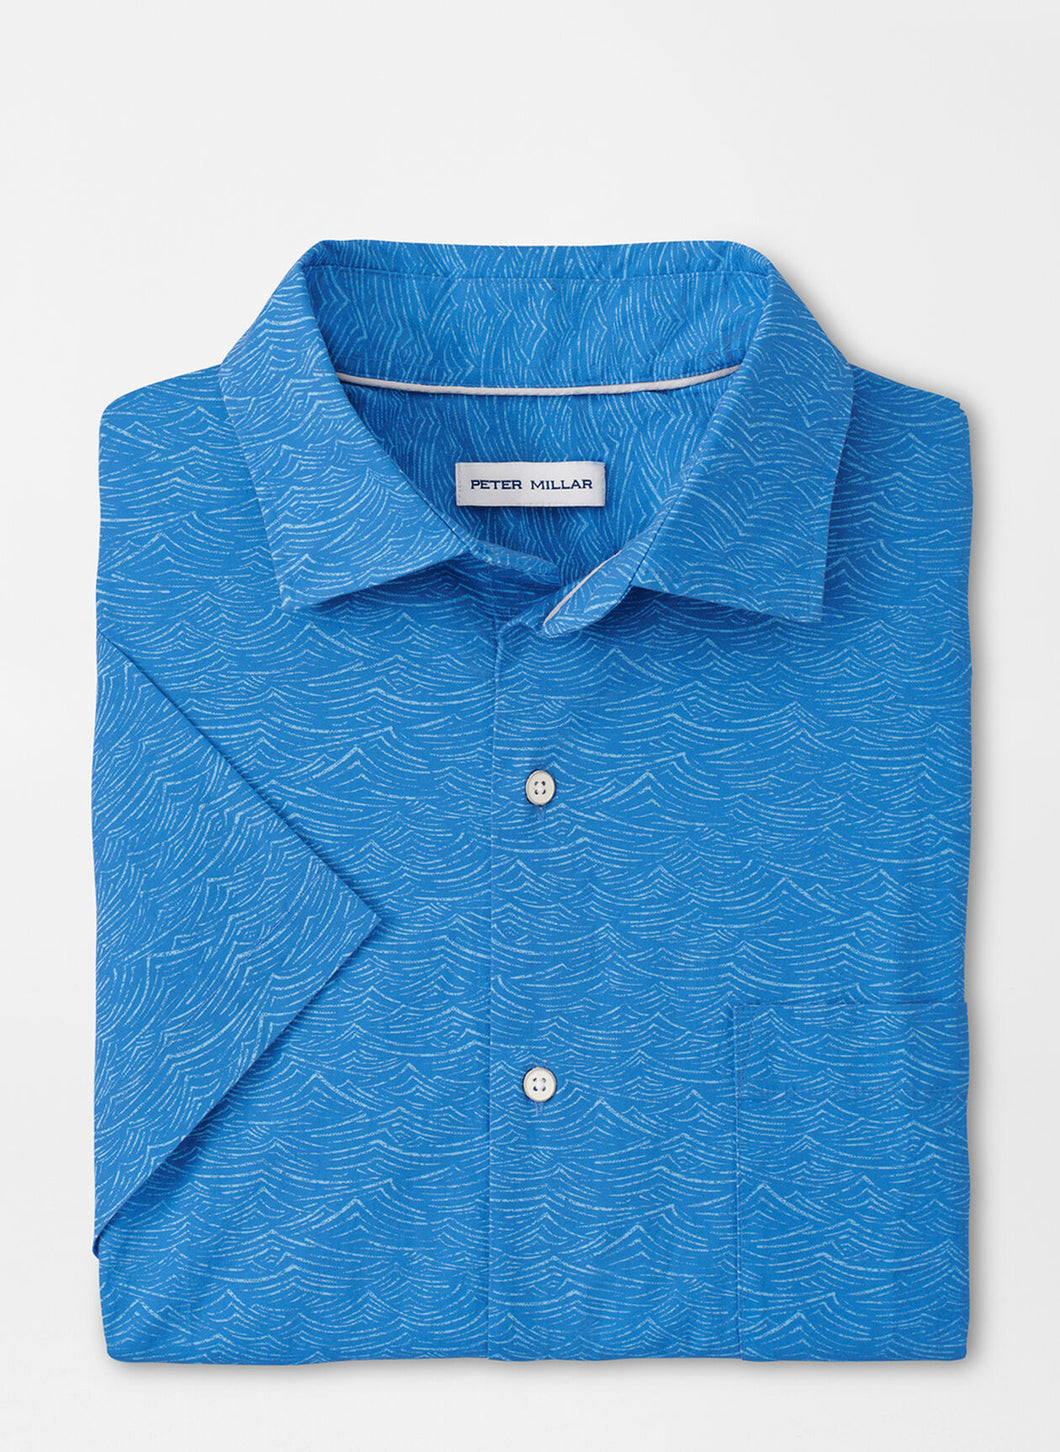 Peter Millar - Sea Swell Cotton-Stretch Sport Shirt - Blue Granite